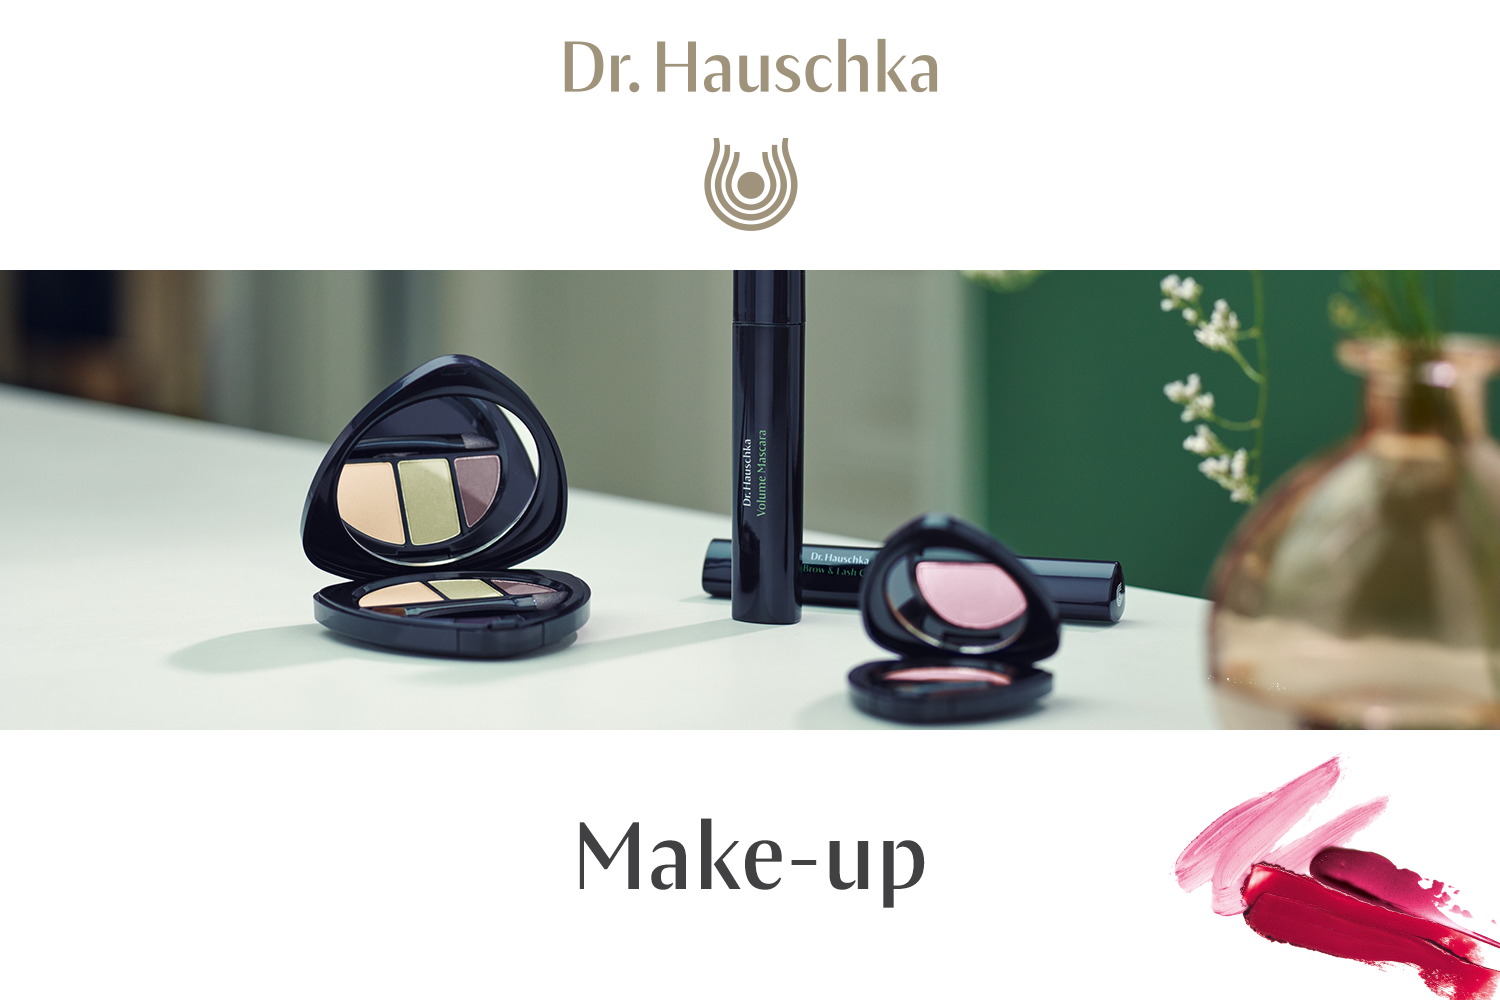 Copy of Dr. Hauschka Make-up